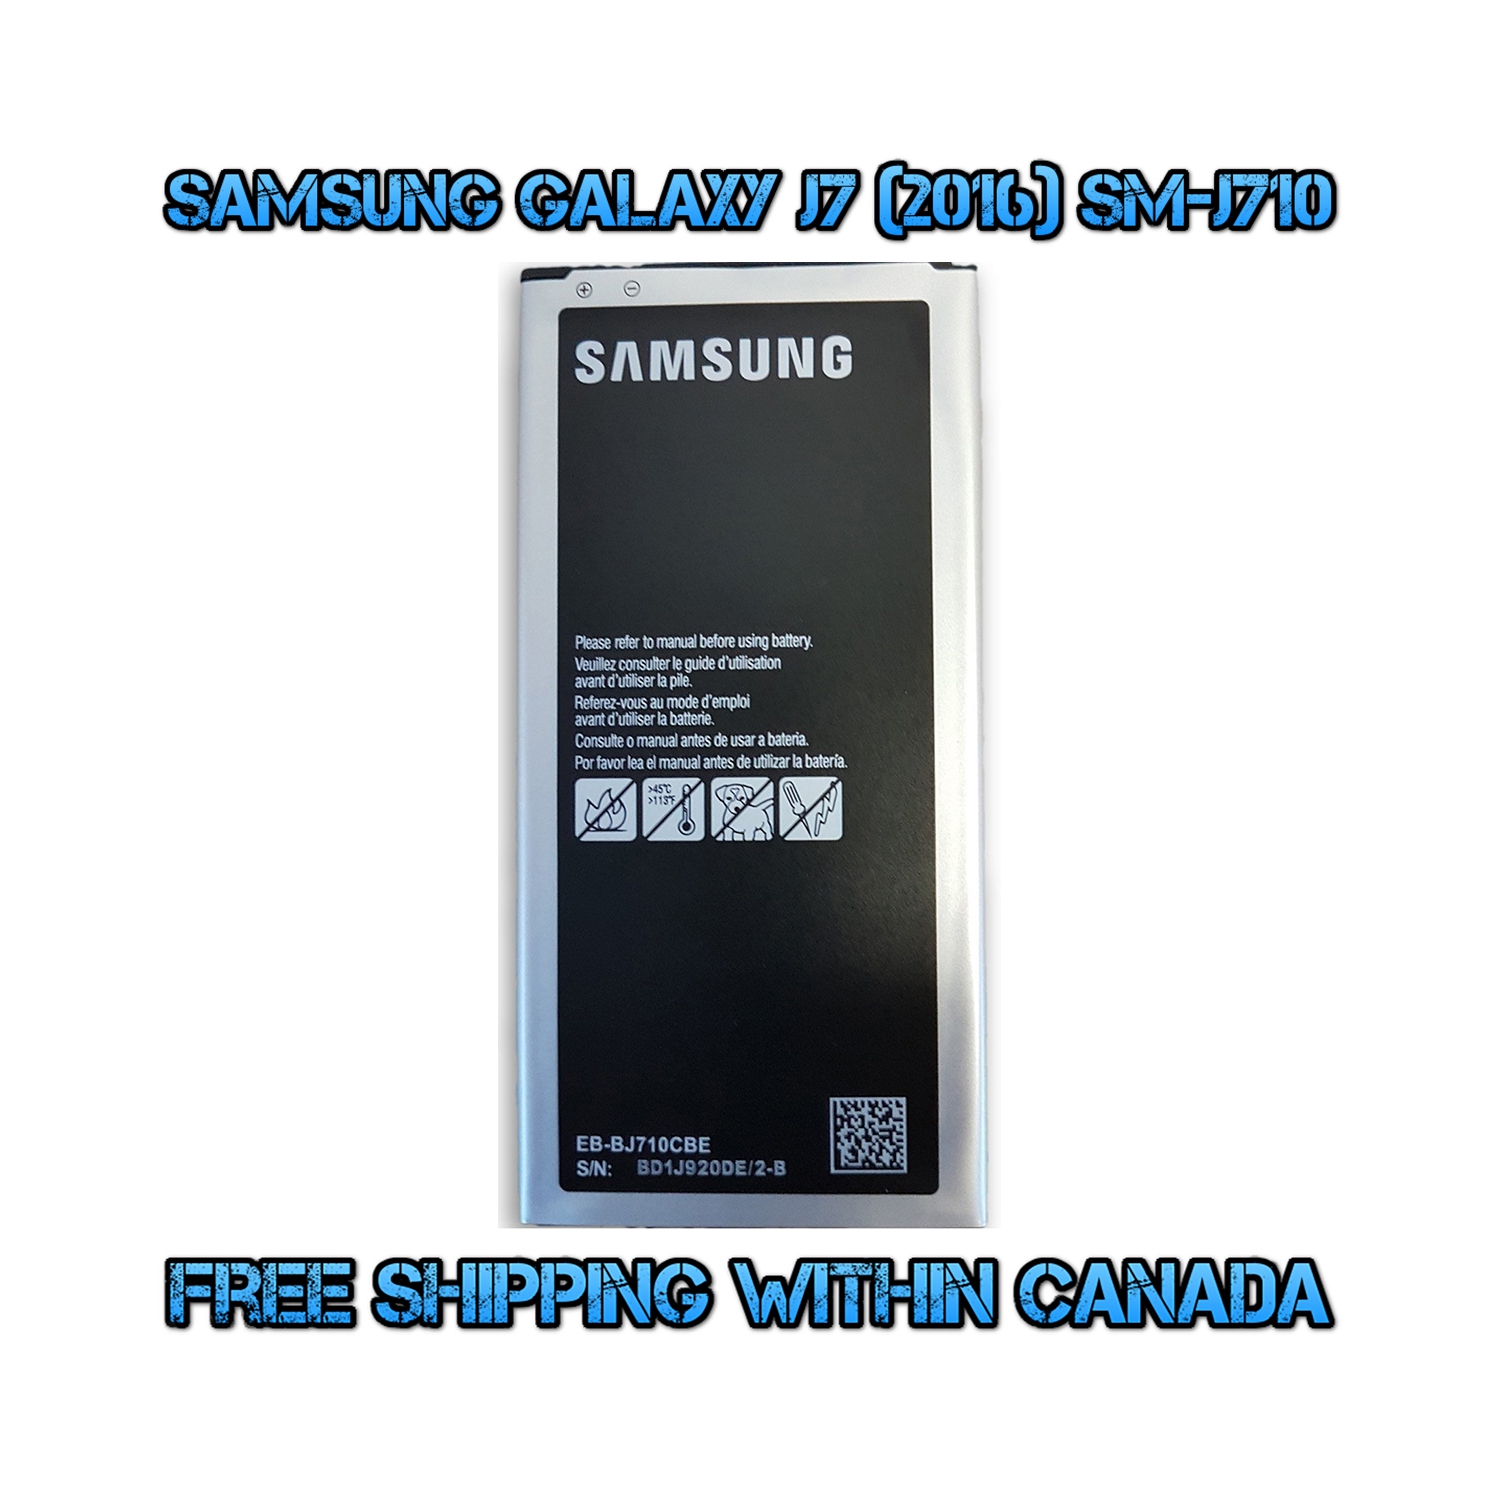 New OEM Replacement Battery Model EB-BJ710CBE 3300 mAh for Samsung Galaxy J7 (2016) SM-J710 - (FREE SHIPPING)